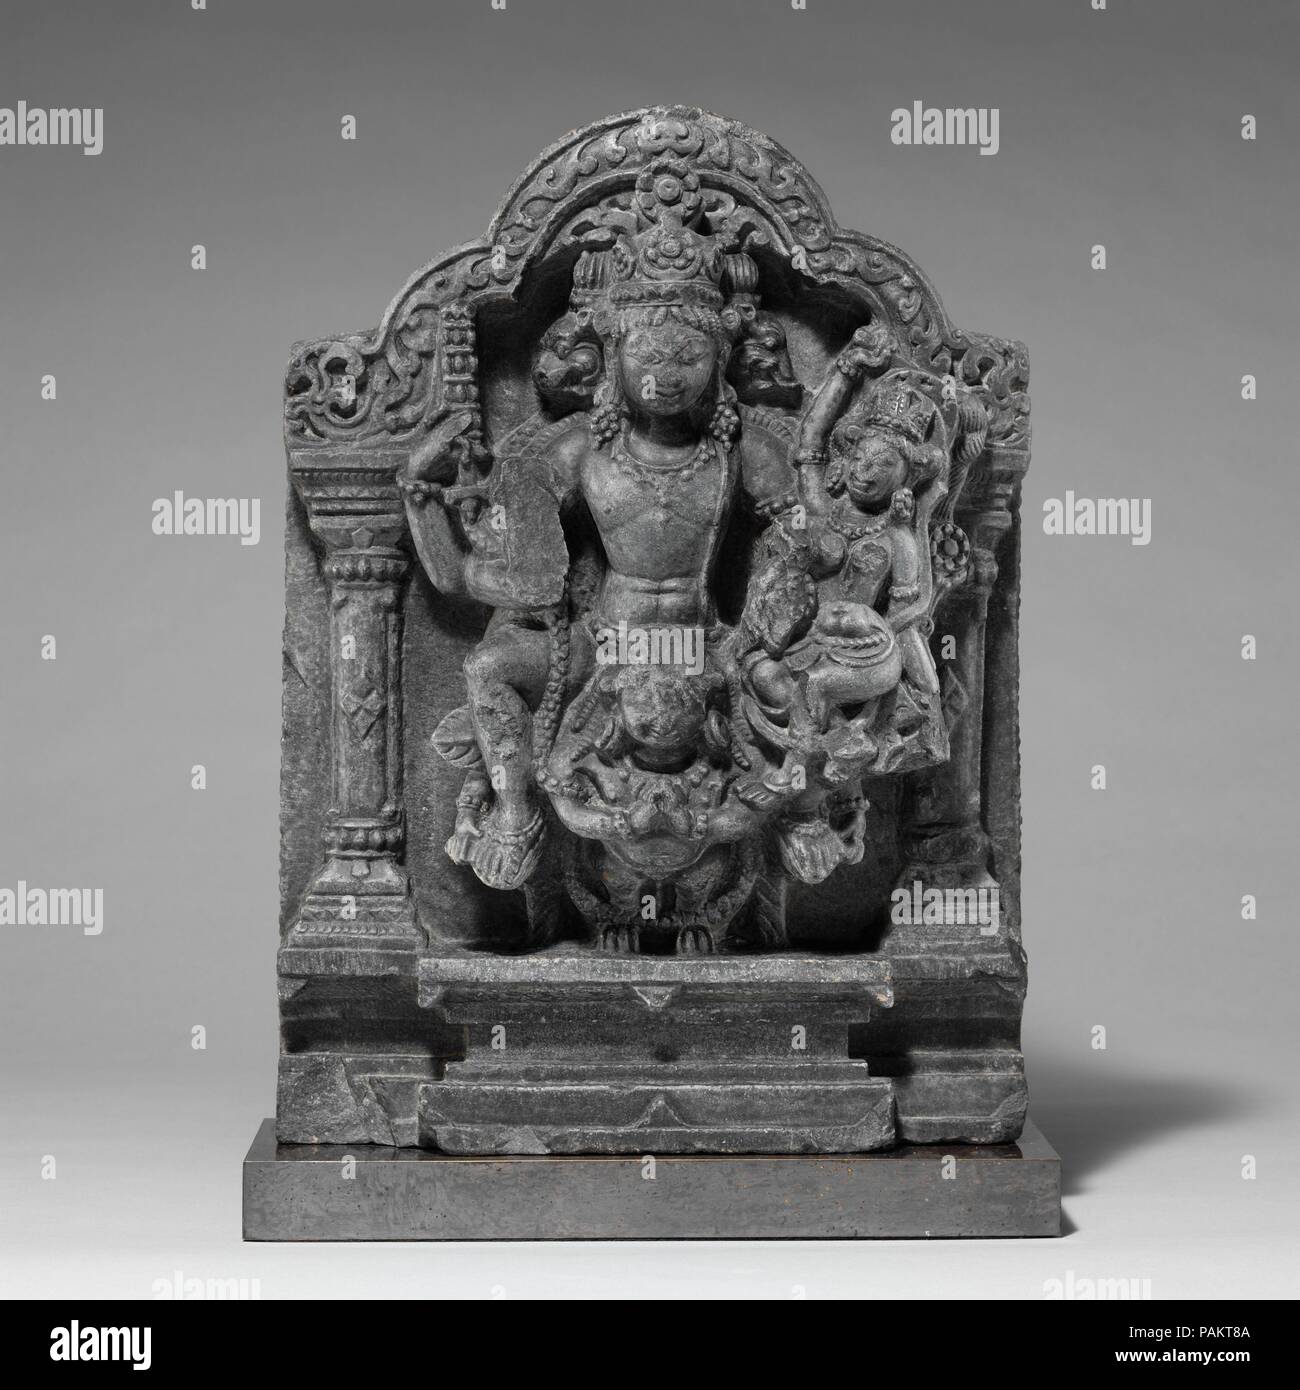 Vishnu and Lakshmi Supported by Garuda. Culture: India (Jammu & Kashmir, ancient kingdom of Kashmir). Dimensions: H. 17 1/4 in. (43.8 cm); W. 12 1/2in. (31.8 cm); D. 5 1/2 in. (14 cm). Date: 11th century. Museum: Metropolitan Museum of Art, New York, USA. Stock Photo